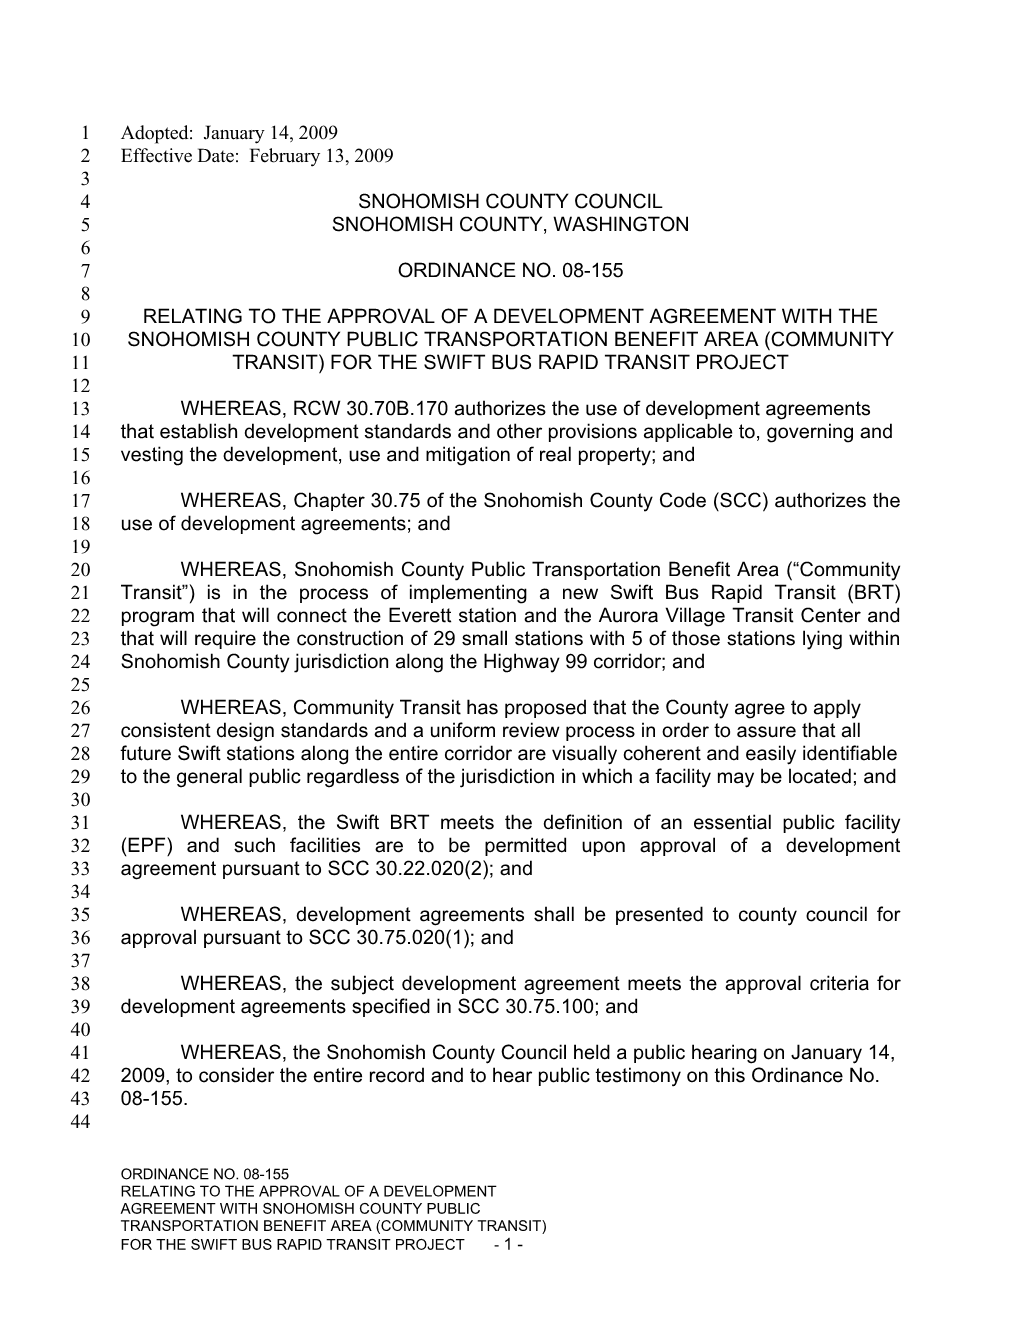 Development Agreement, Snohomish County Public